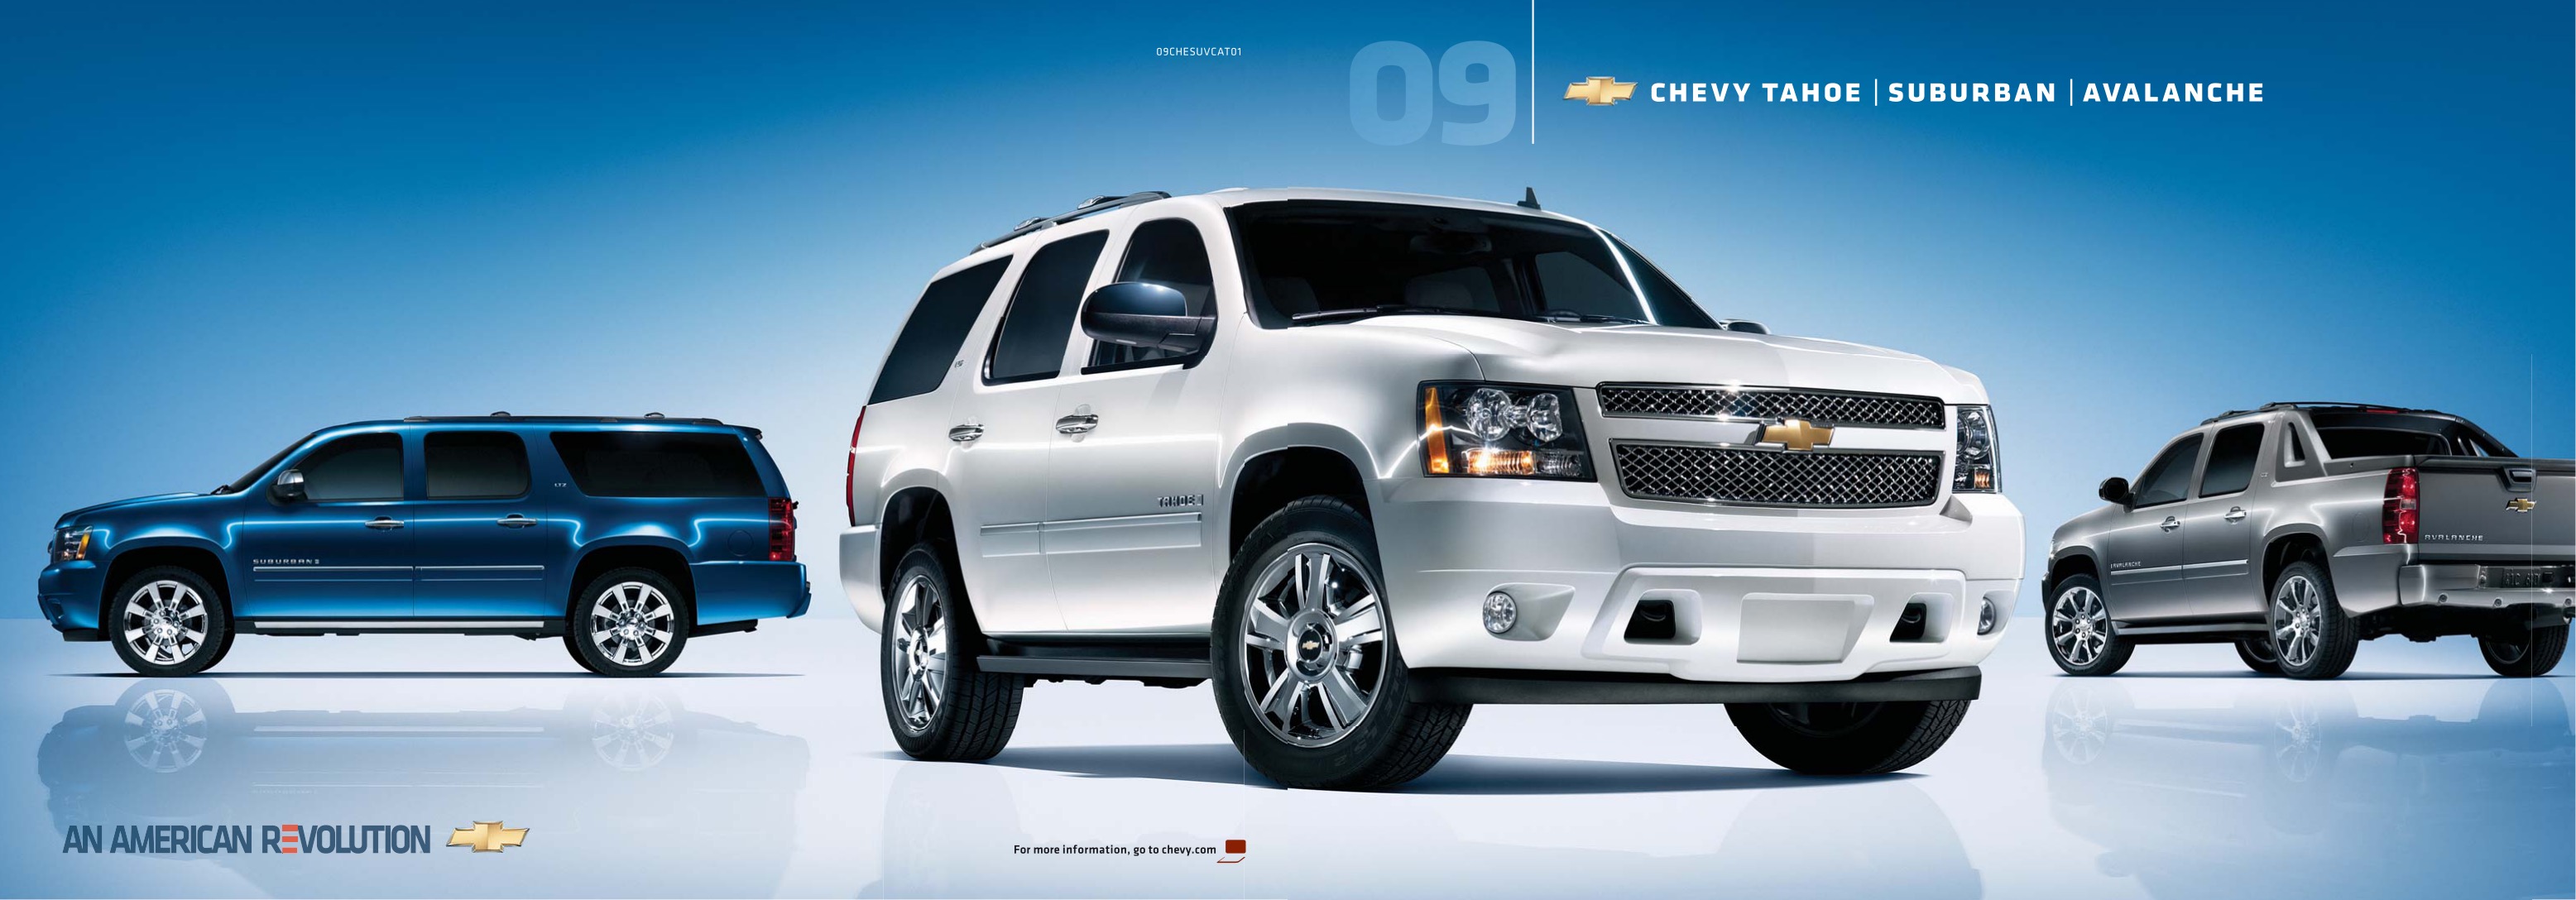 2009 Chevrolet Avalanche Brochure